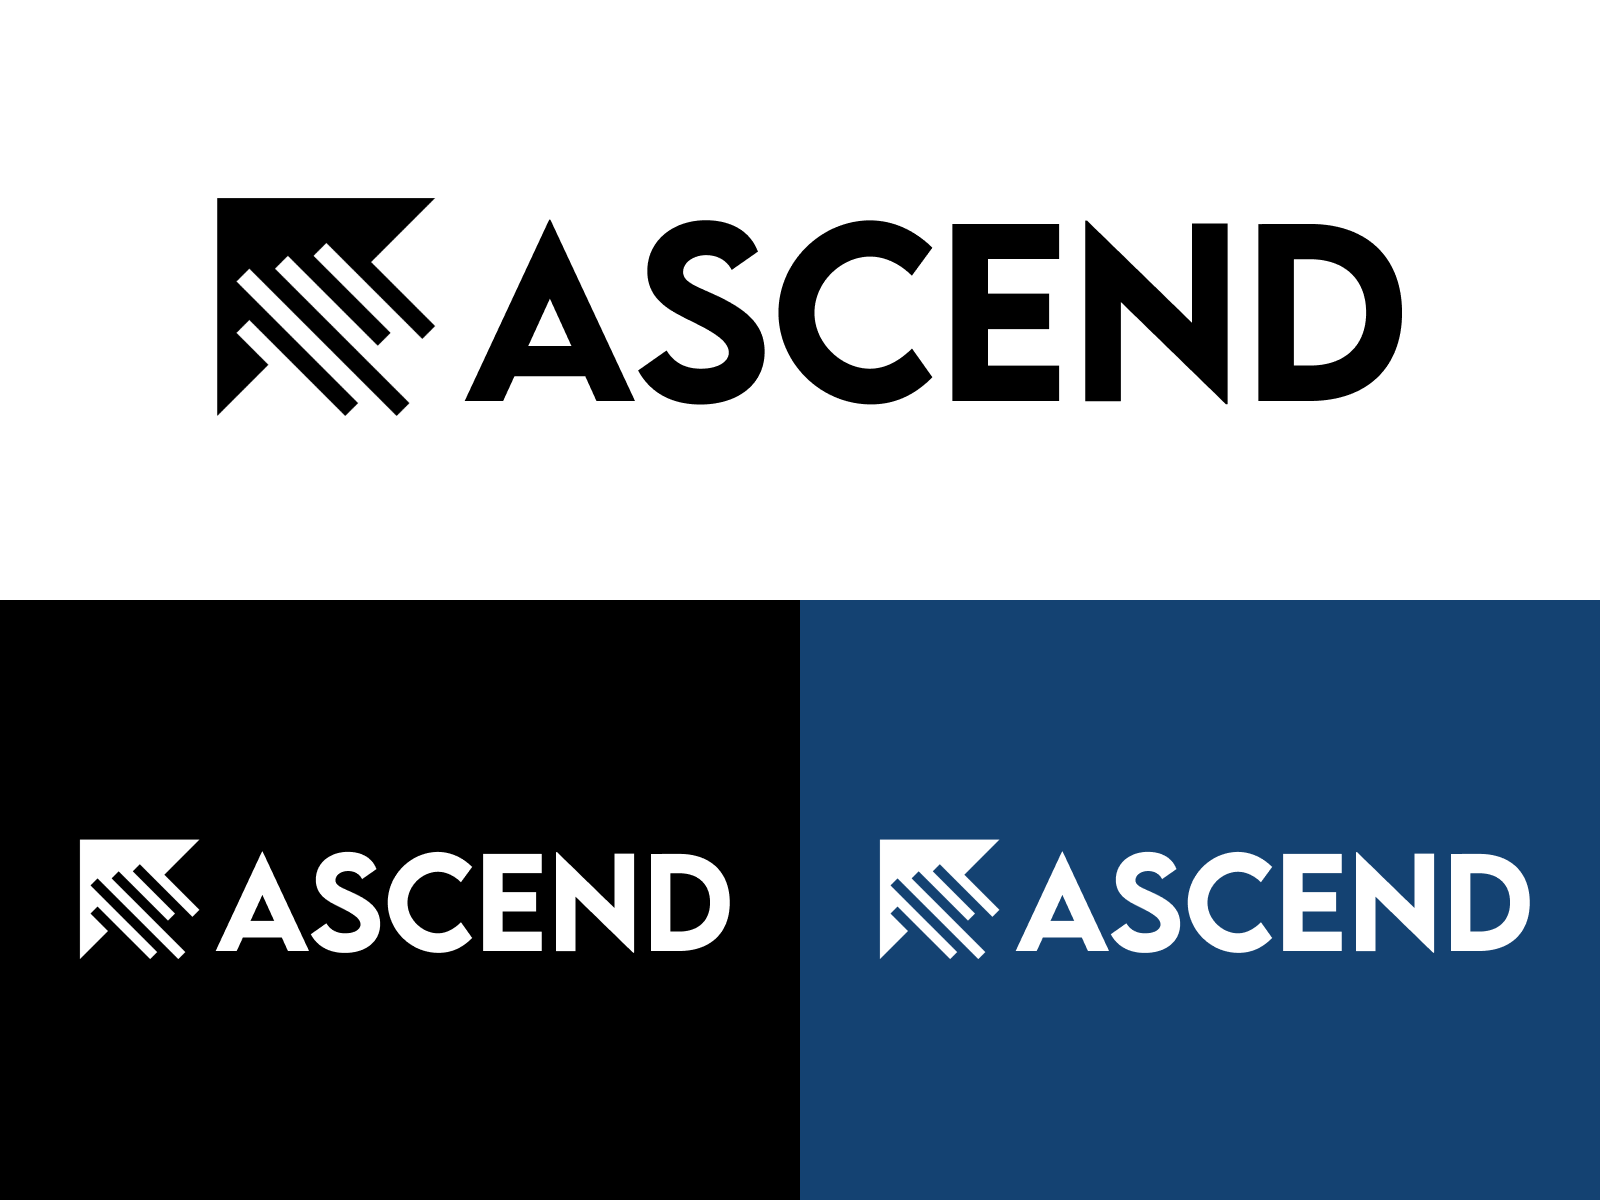 ASCEND logo design concept by Alex Williams on Dribbble